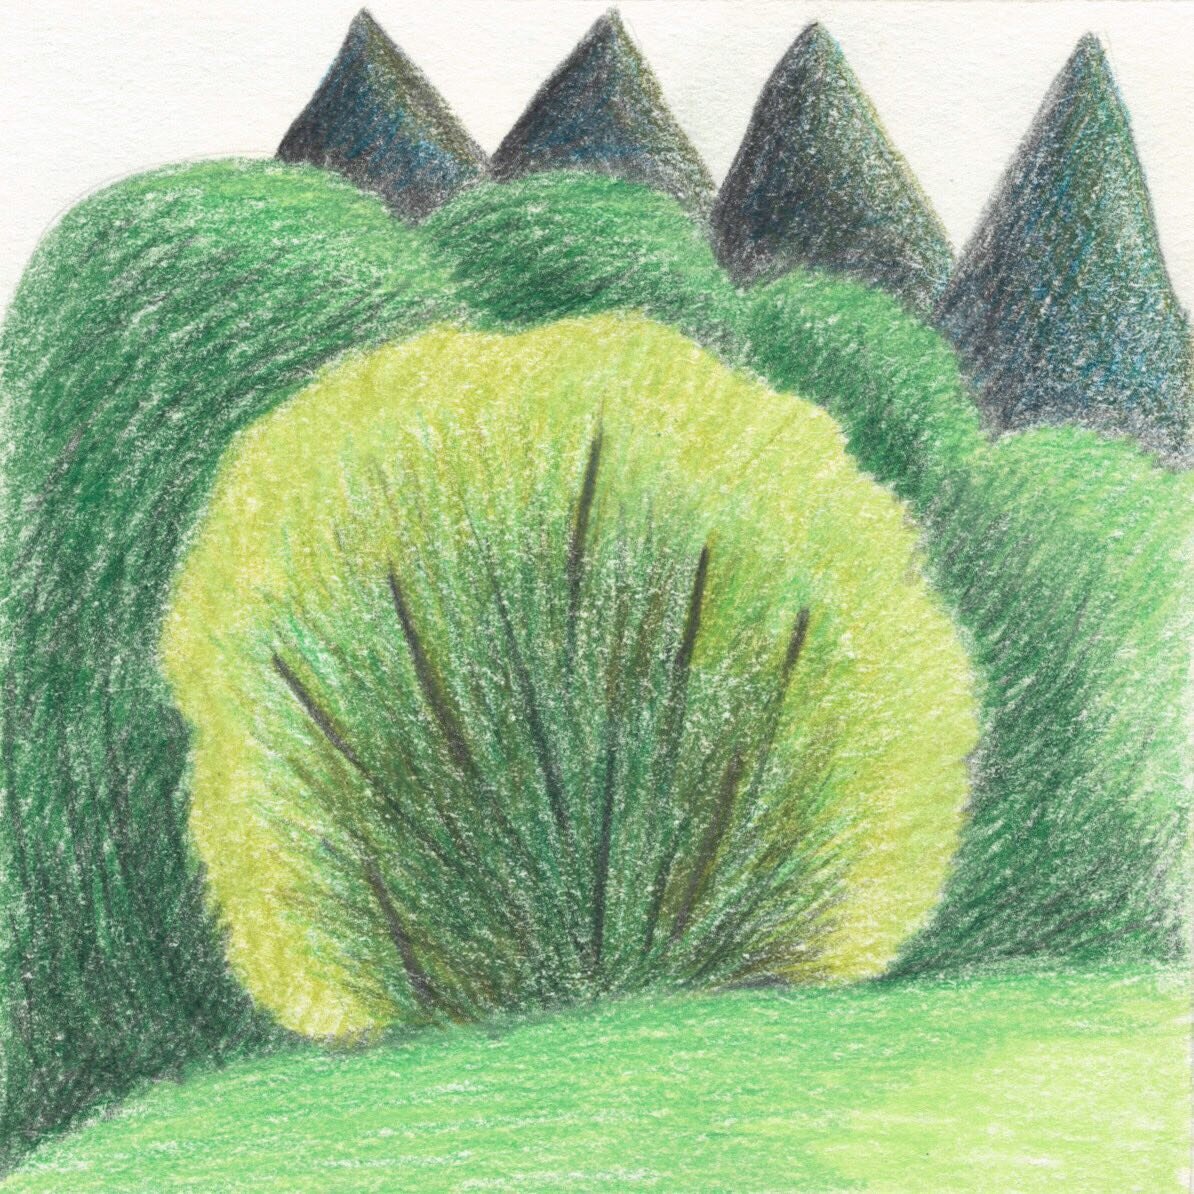 Daily tiny drawing&hellip;green, green, green

#dailydrawing #coloredpencil #carandache #drawinginnature